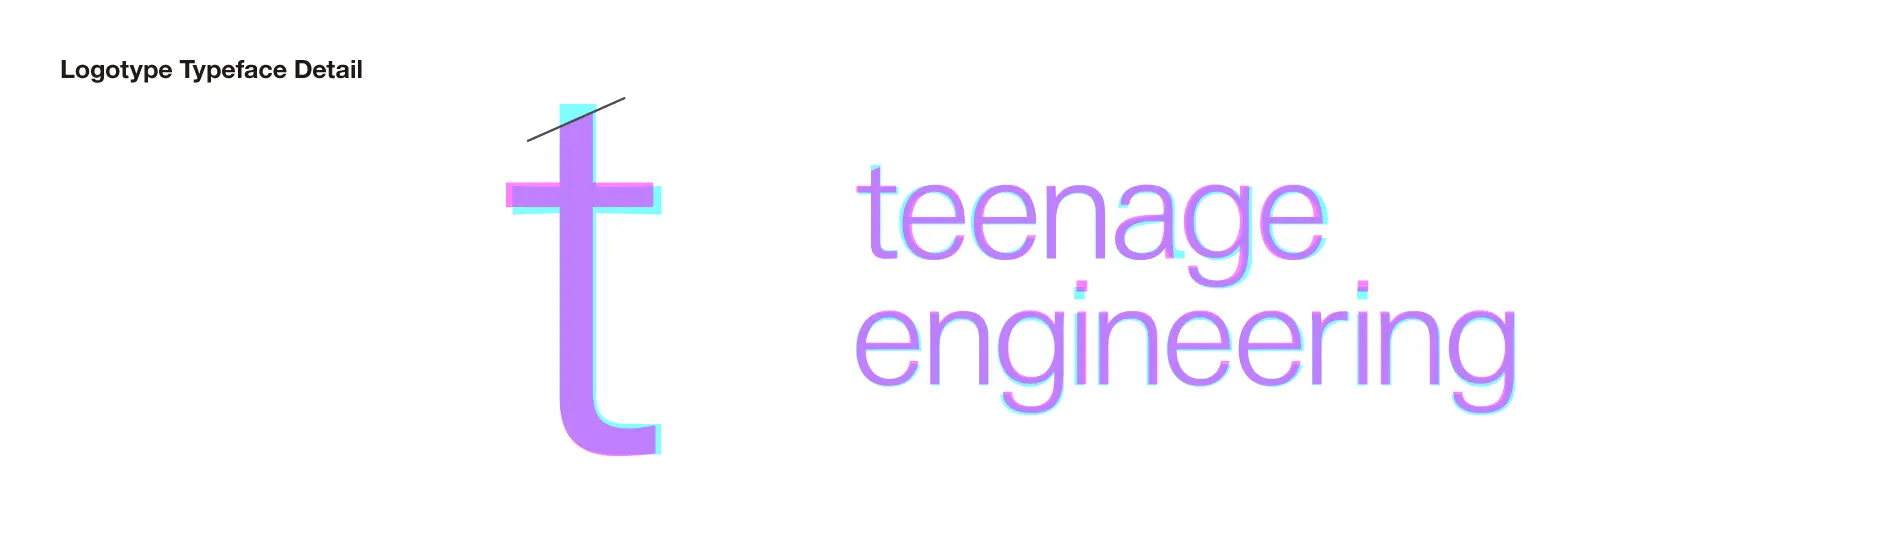 teenage engineeringブランド事例